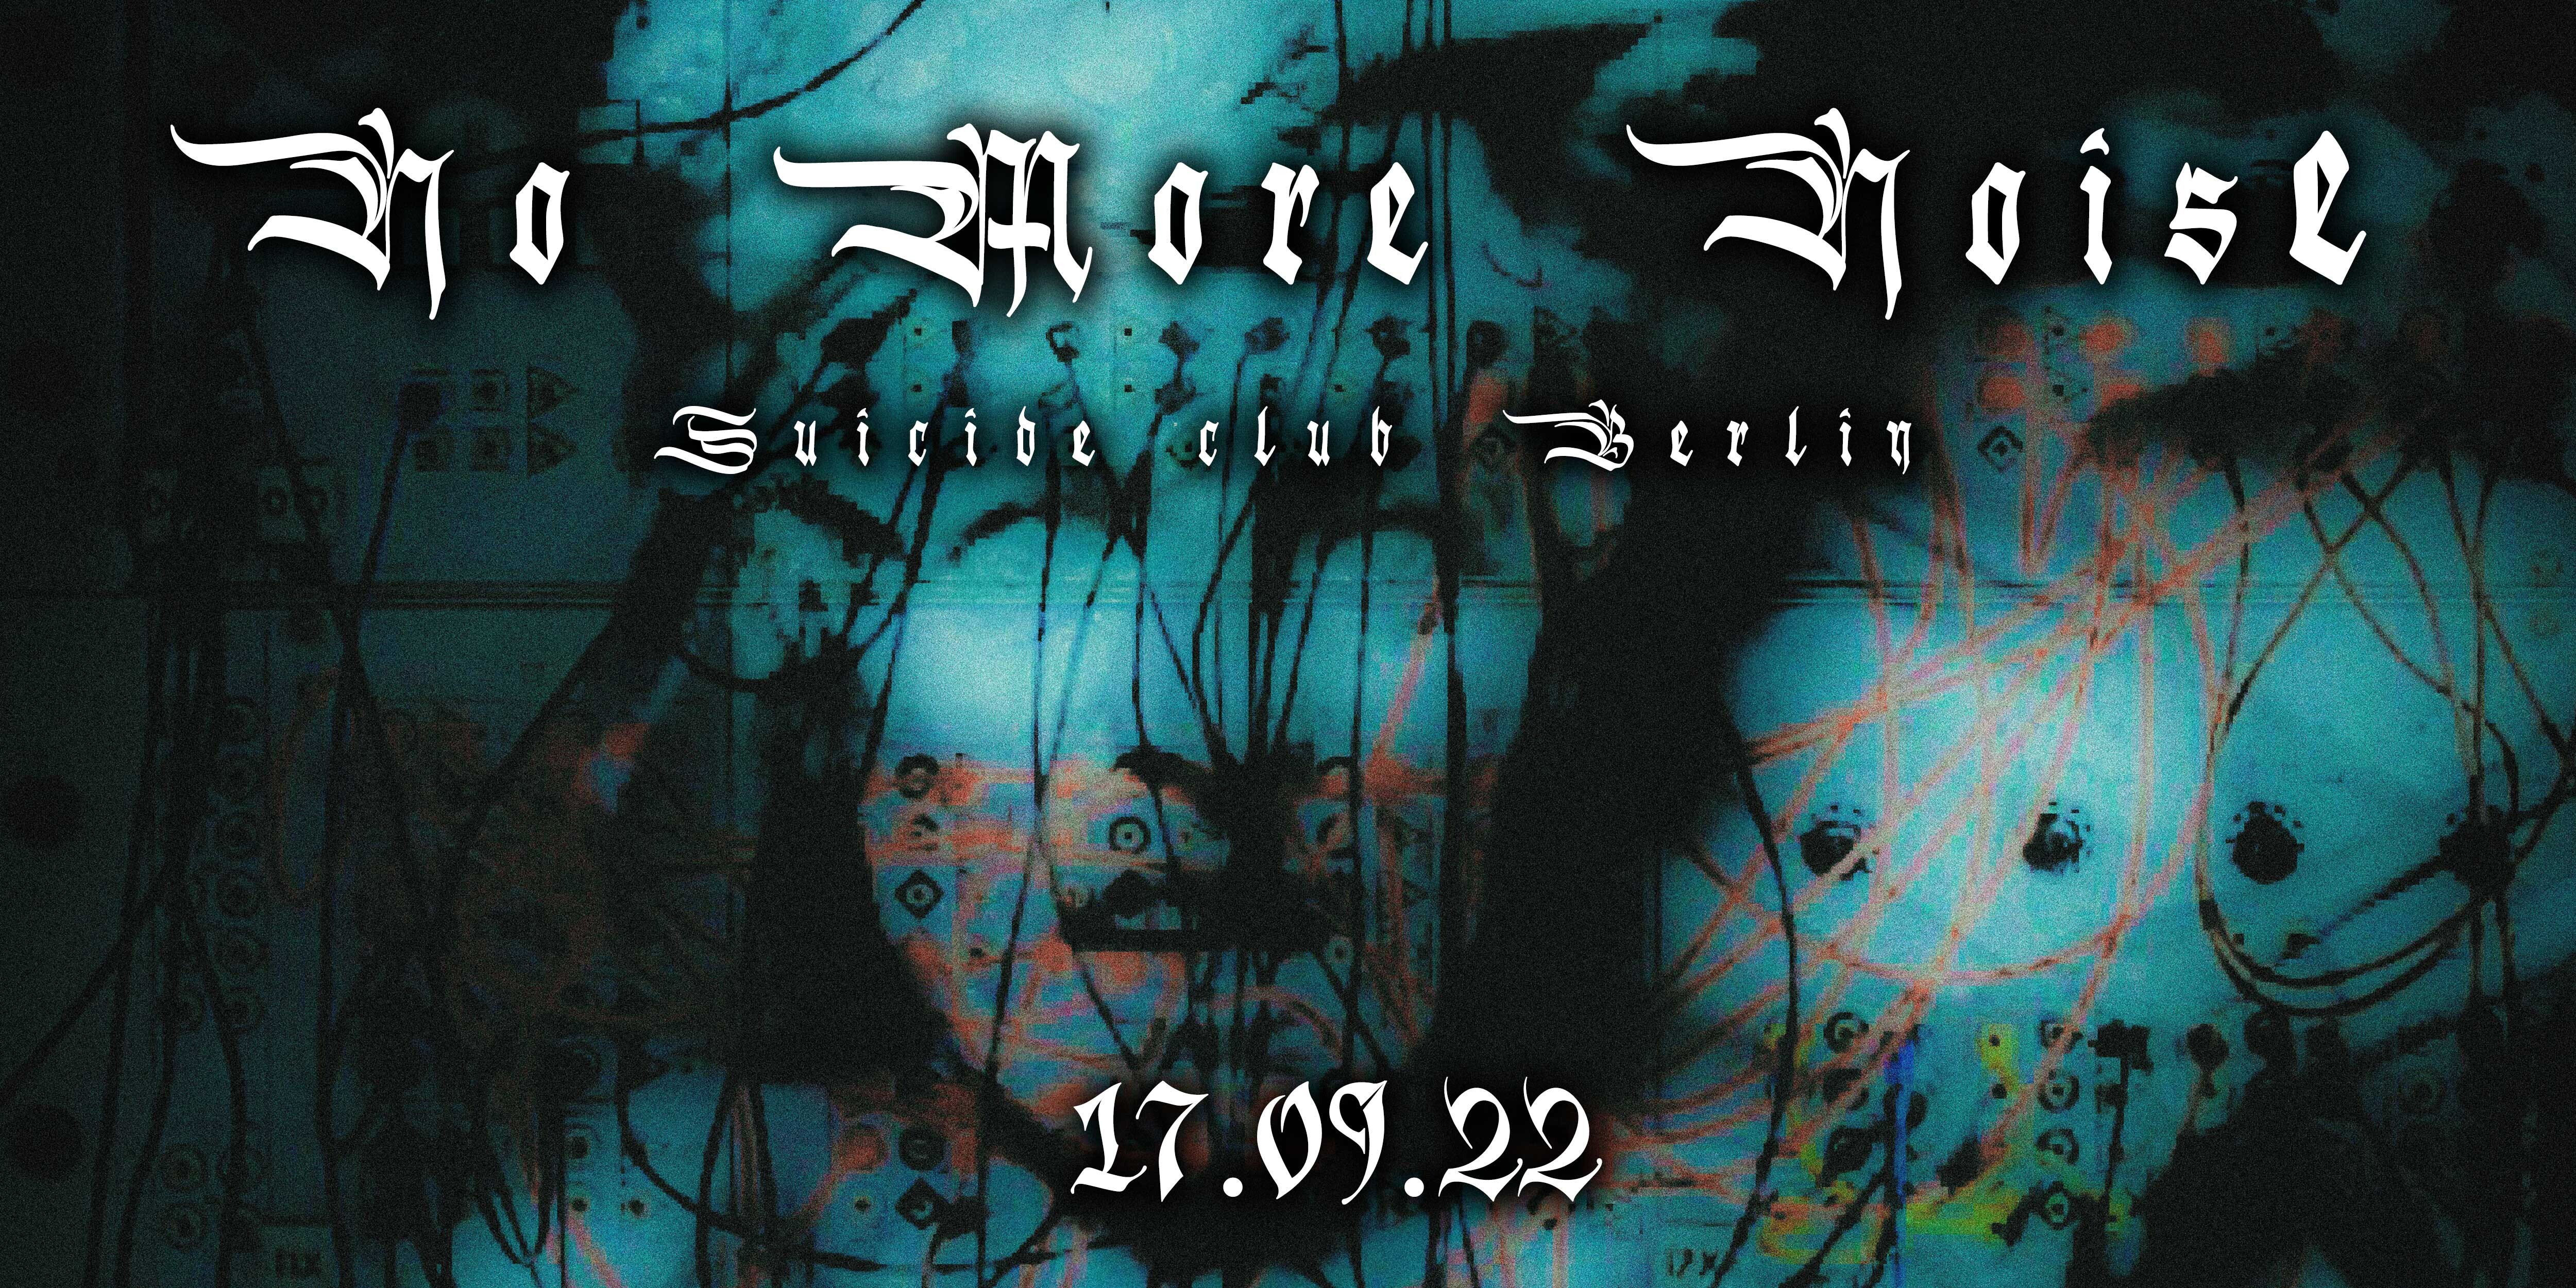 Suicide Club Berlin Eventflyer #1 vom 17.09.2022